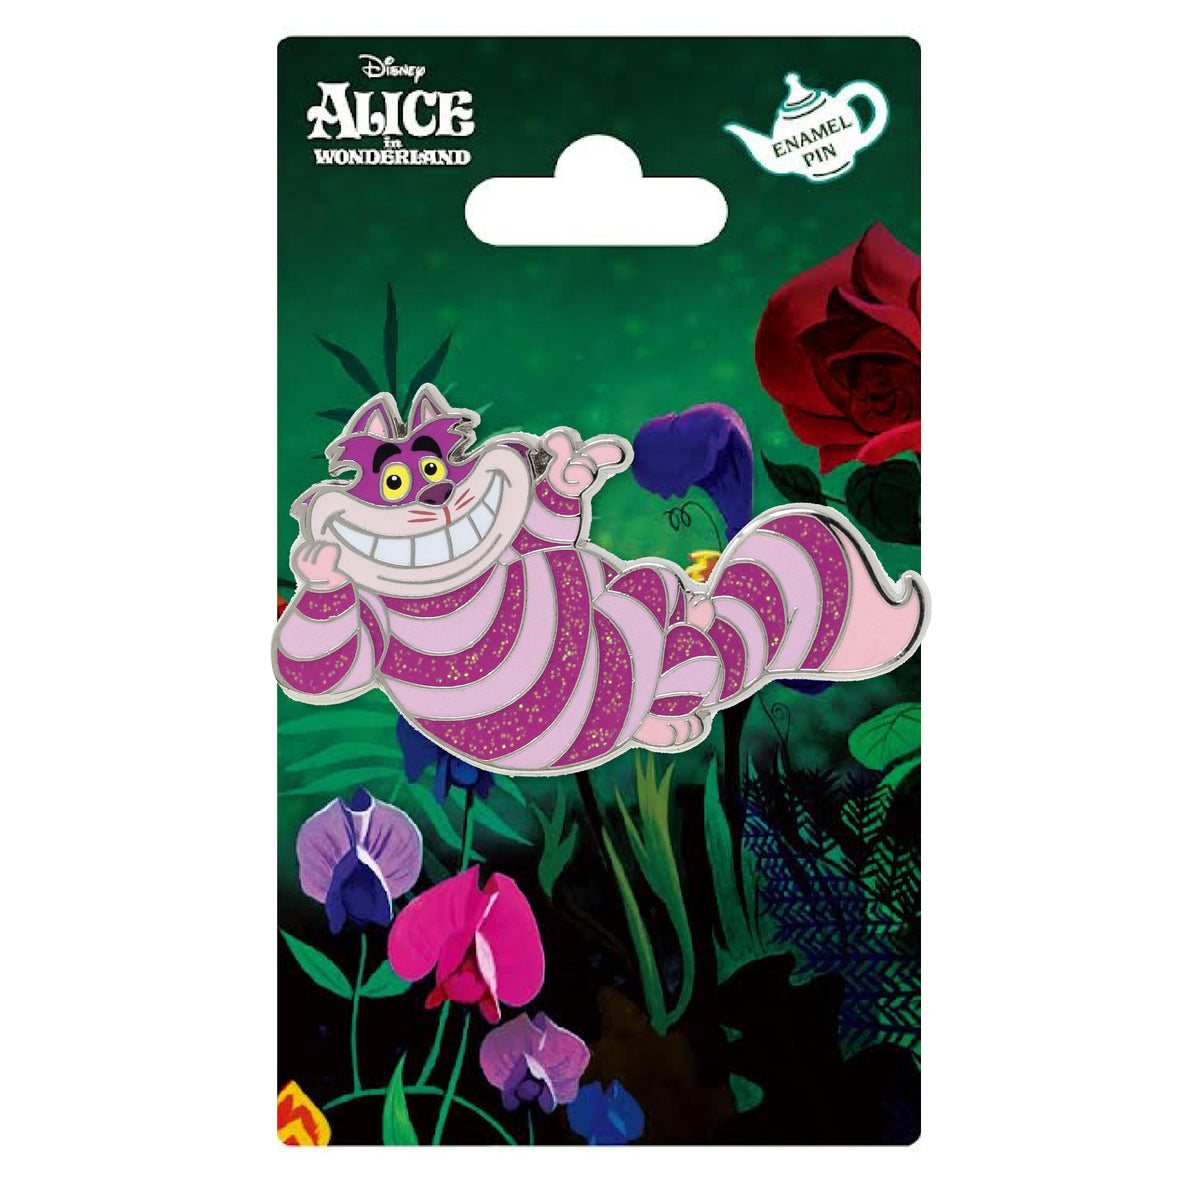 Disney Alice in Wonderland Cheshire Cat Coreline Collectible Pin - NEW RELEASE